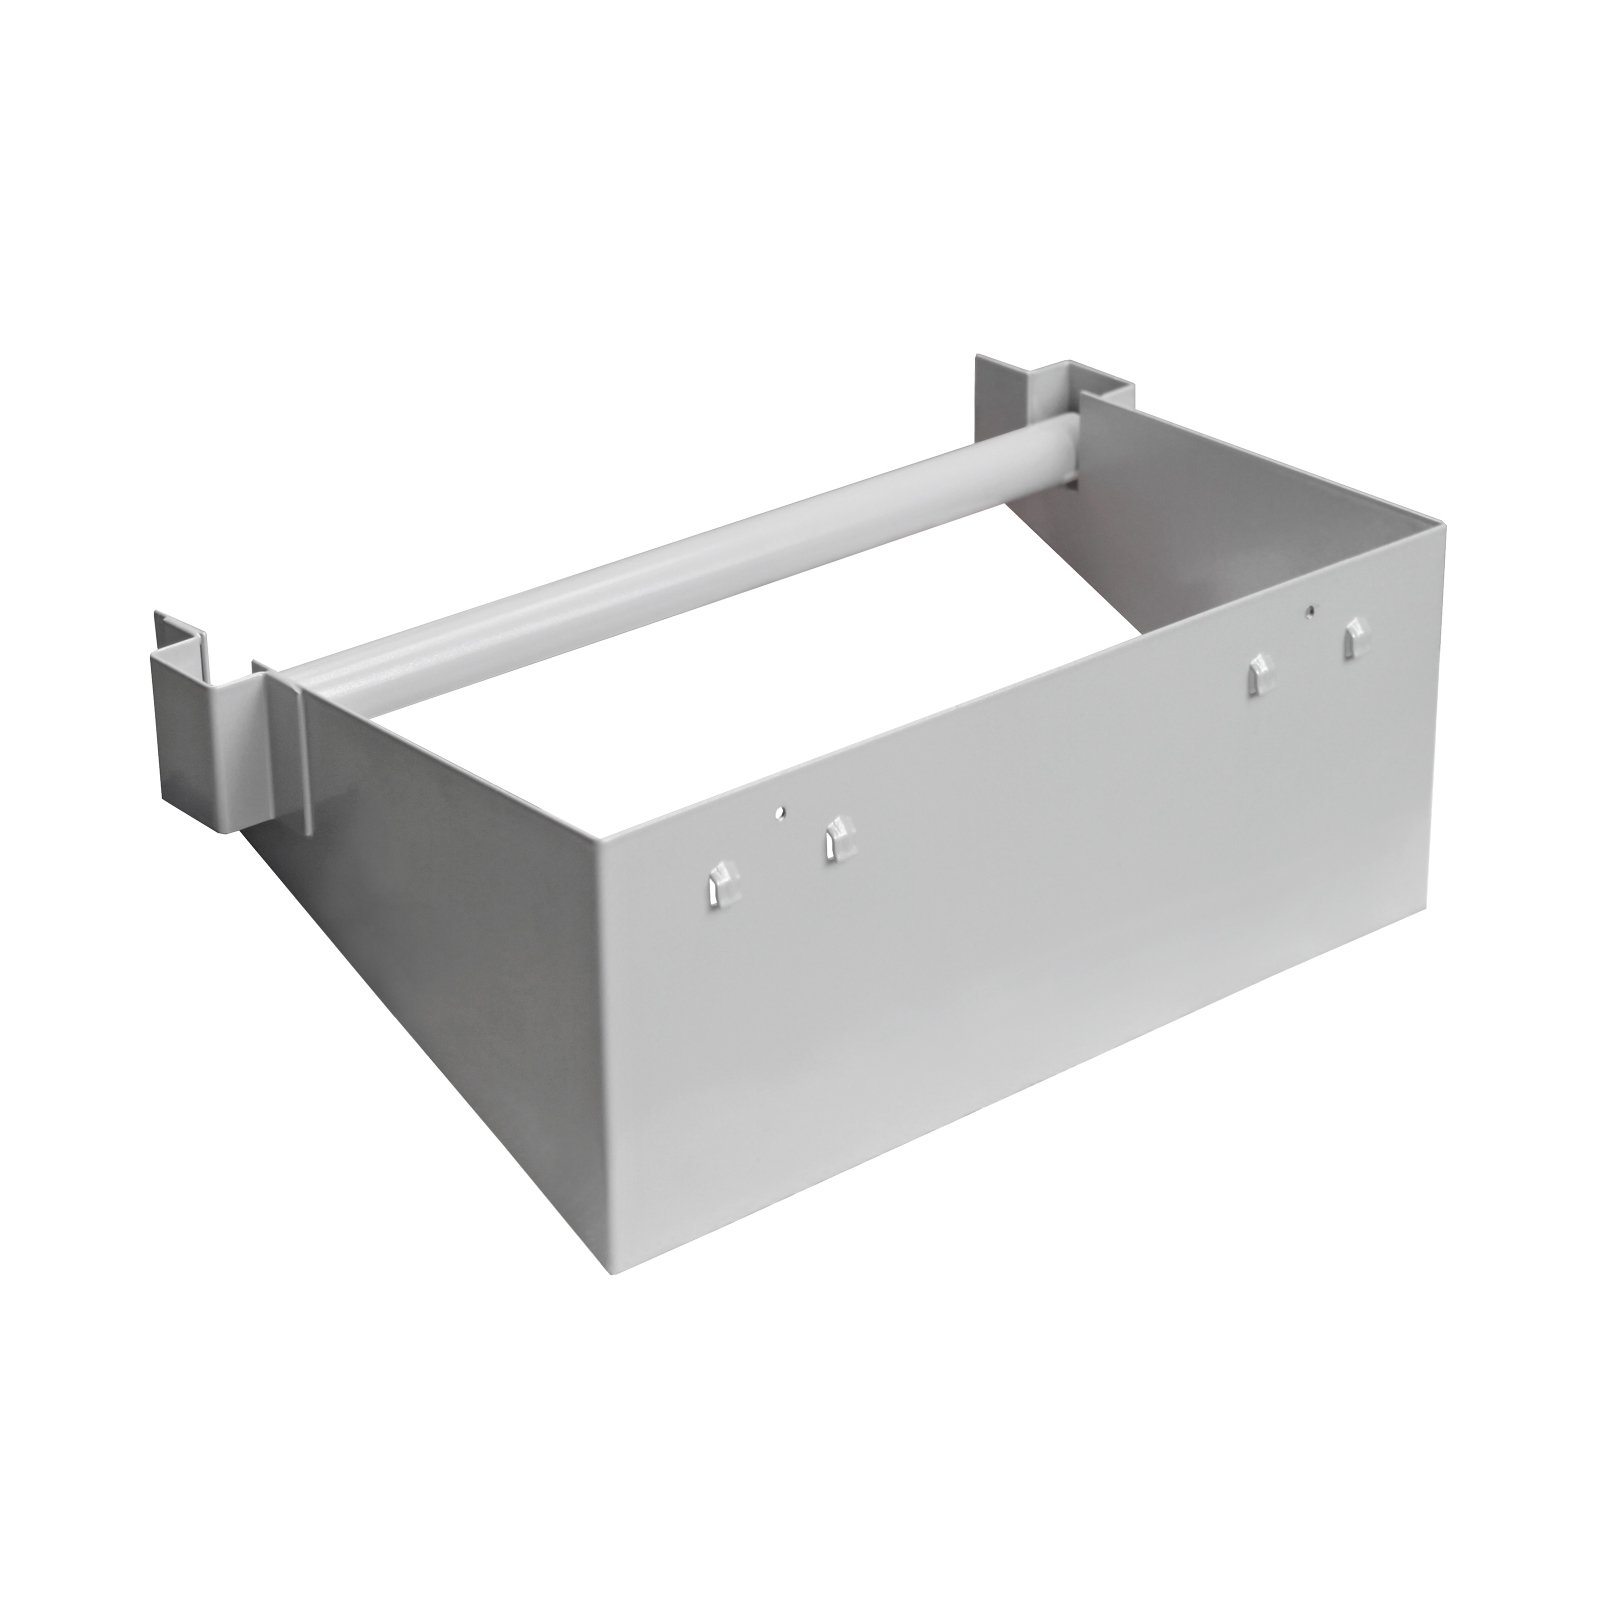 Papierrollenhalter für Lochplatte | HxBxT 12x34x19,2cm | Weissaluminium